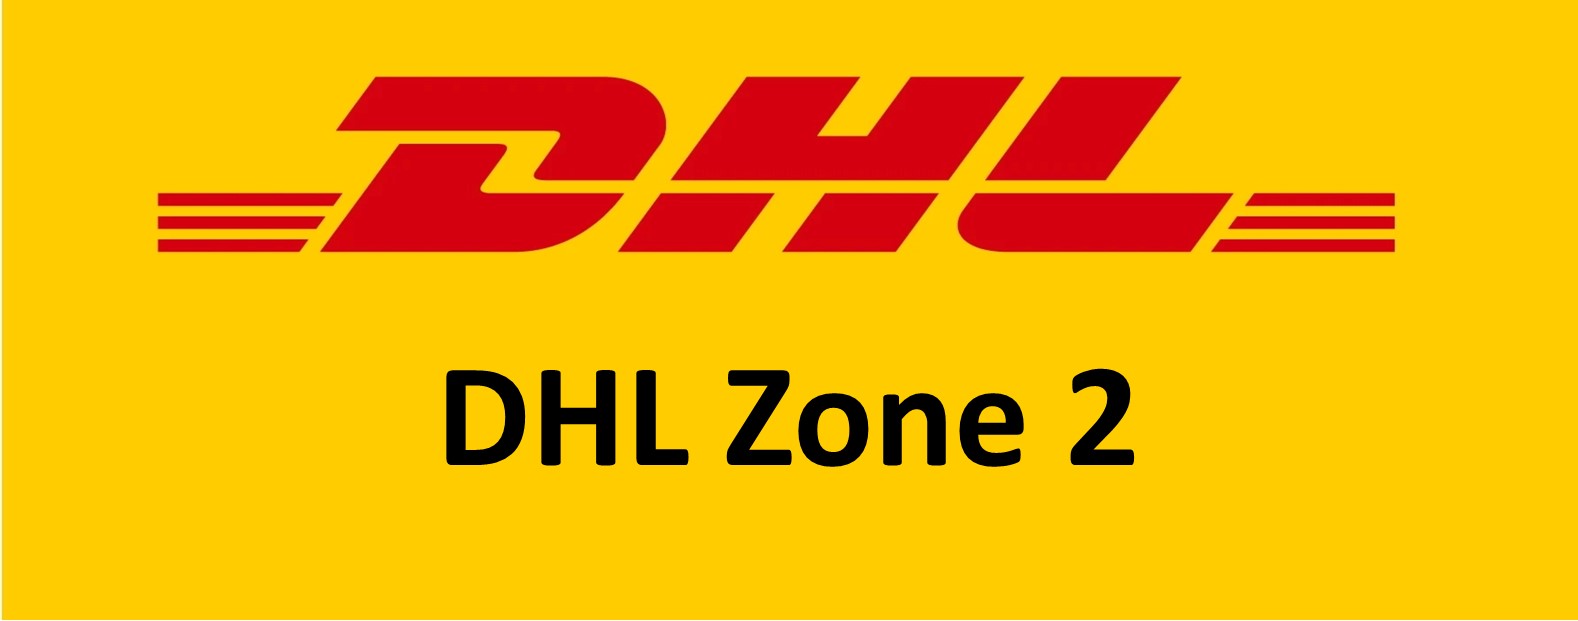 DHL Zone 2